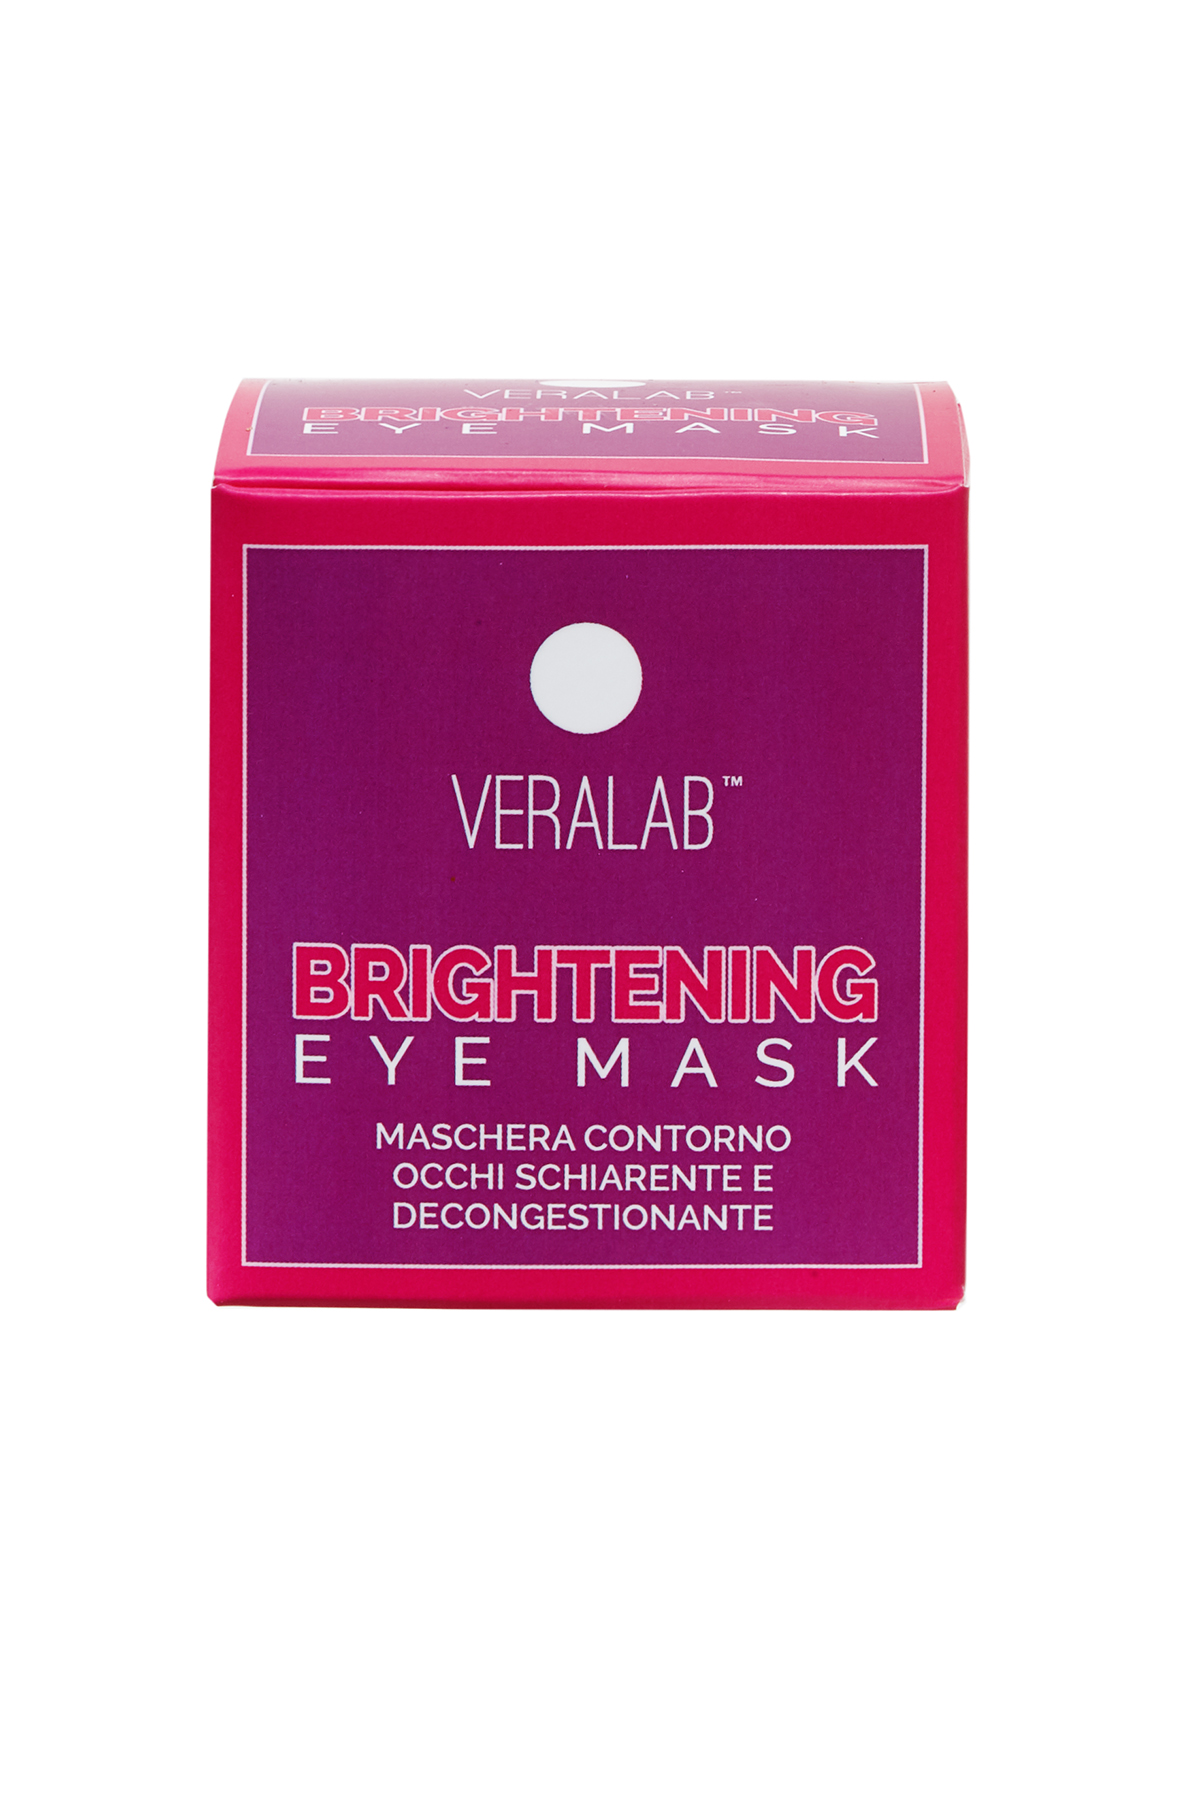 VeraLab_Brightening Mask Pack 1